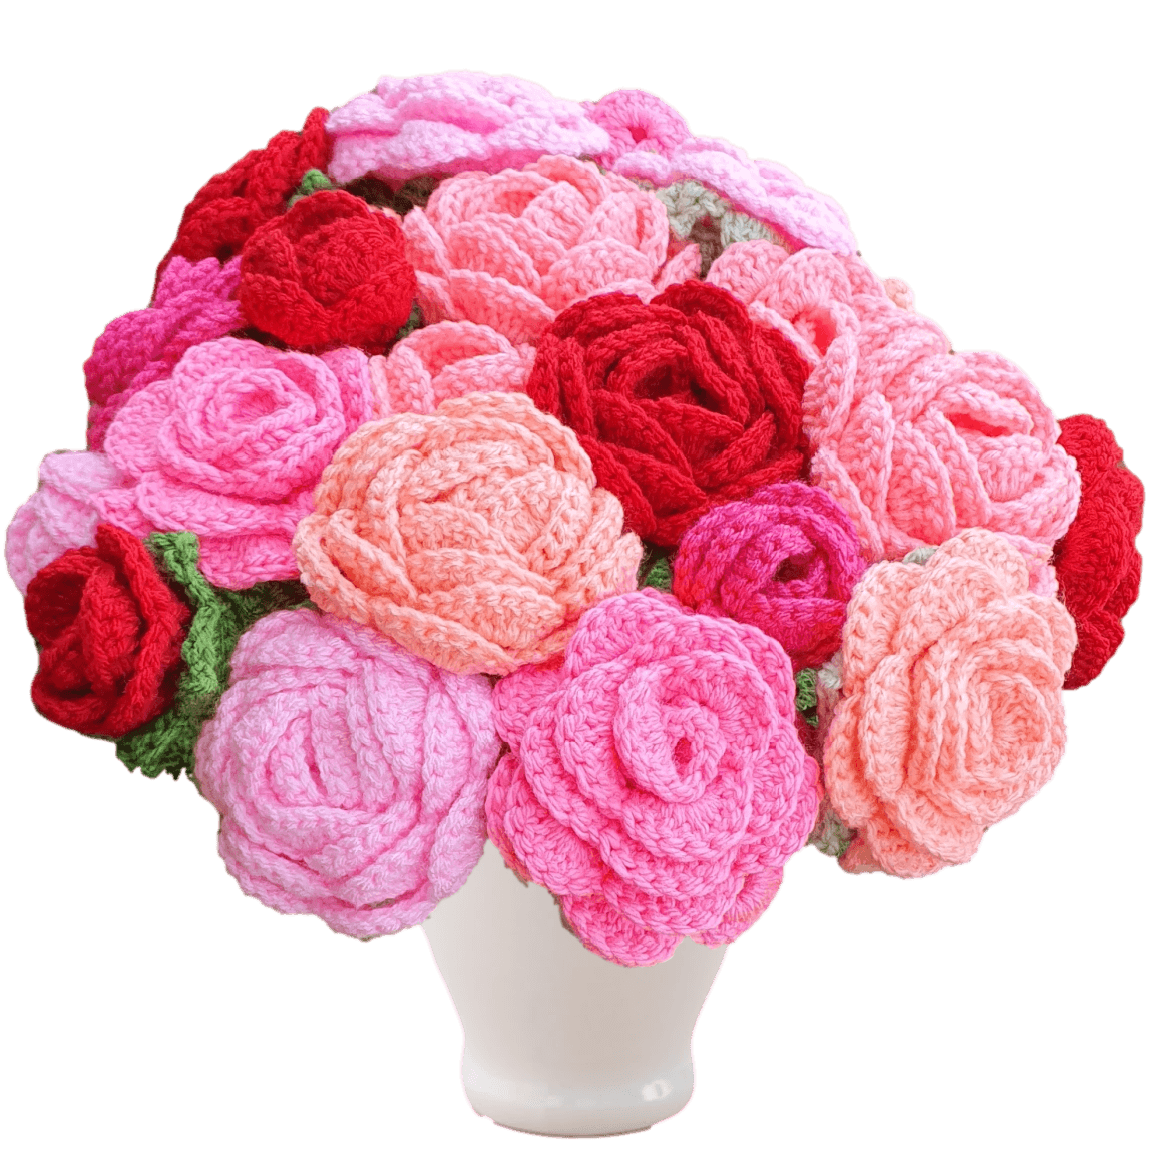 The Ultimate Crochet Rose Bouquet - The Secret Yarnery